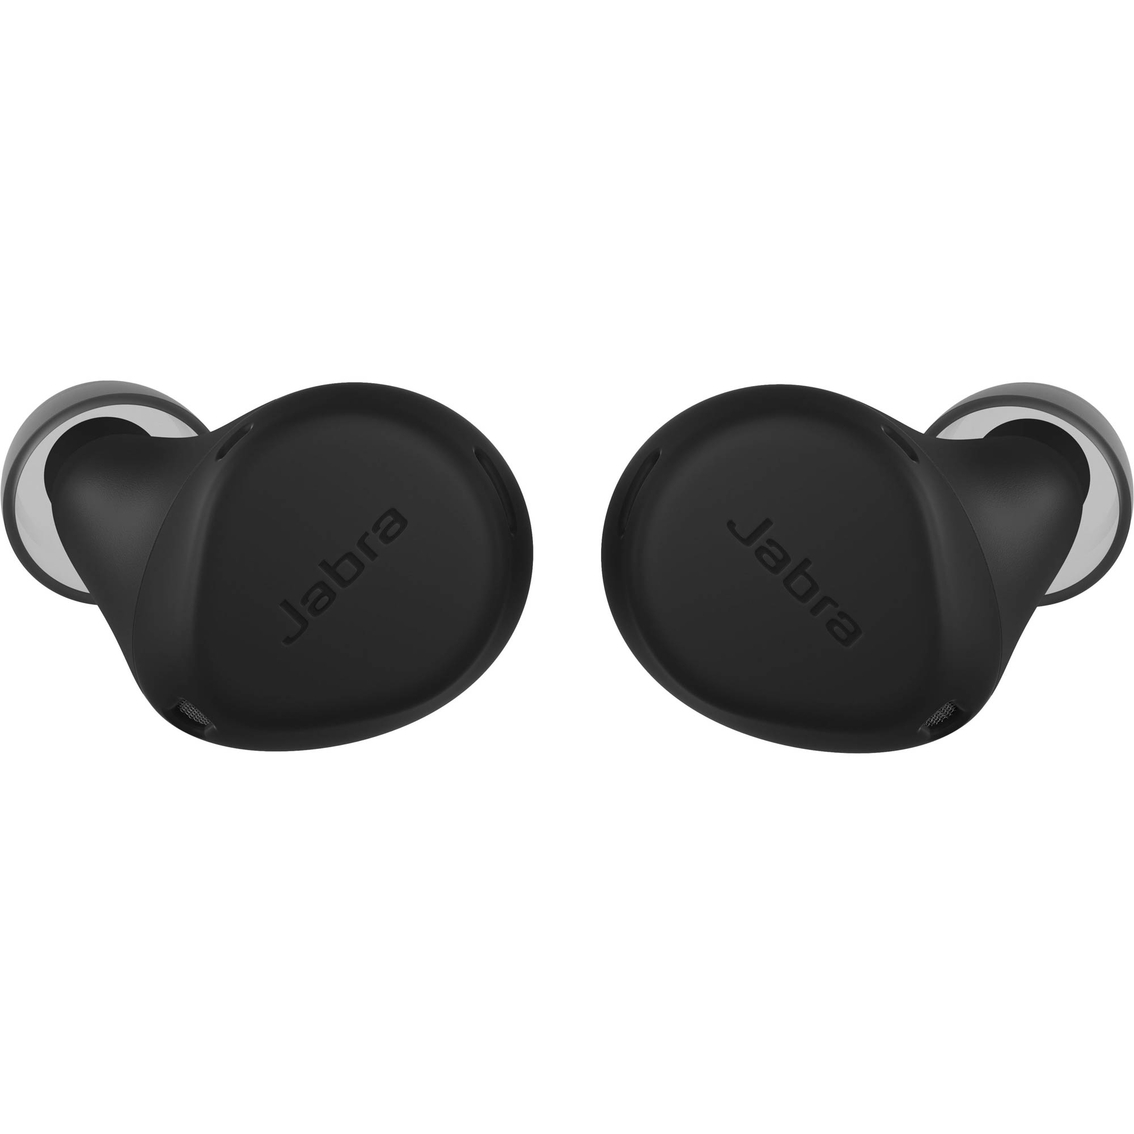 Jabra Elite 7 Active True Wireless Noise Canceling In Ear Headphones - Image 3 of 5